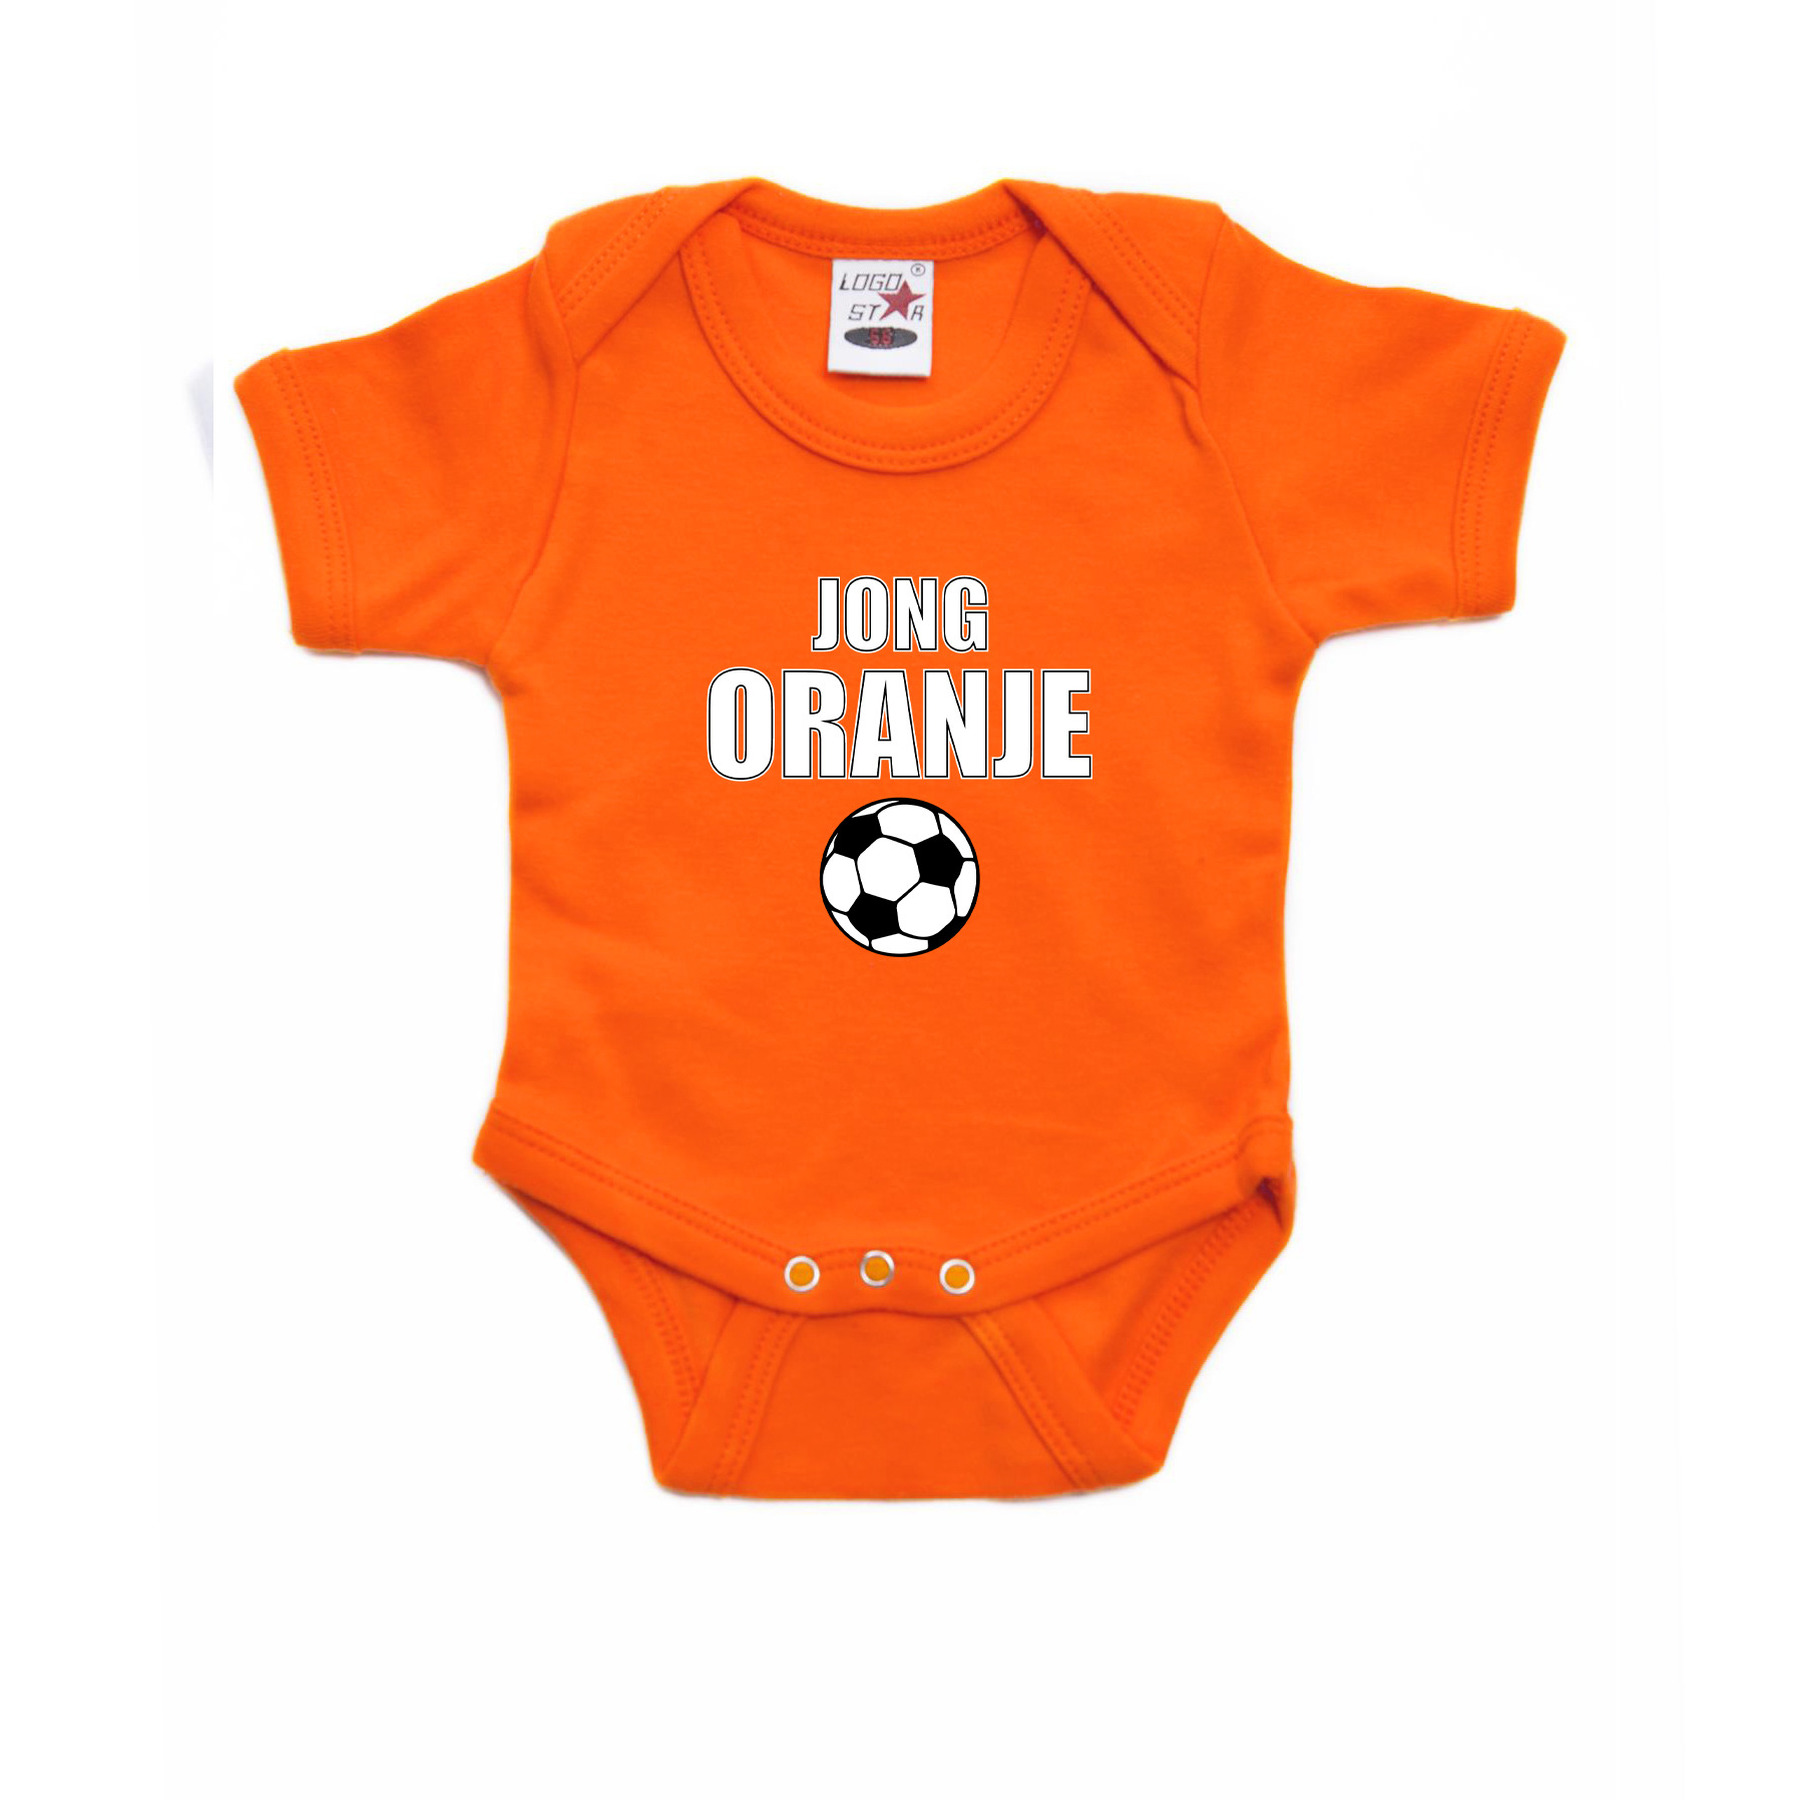 Oranje romper jong oranje Holland-Nederland supporter voor babys